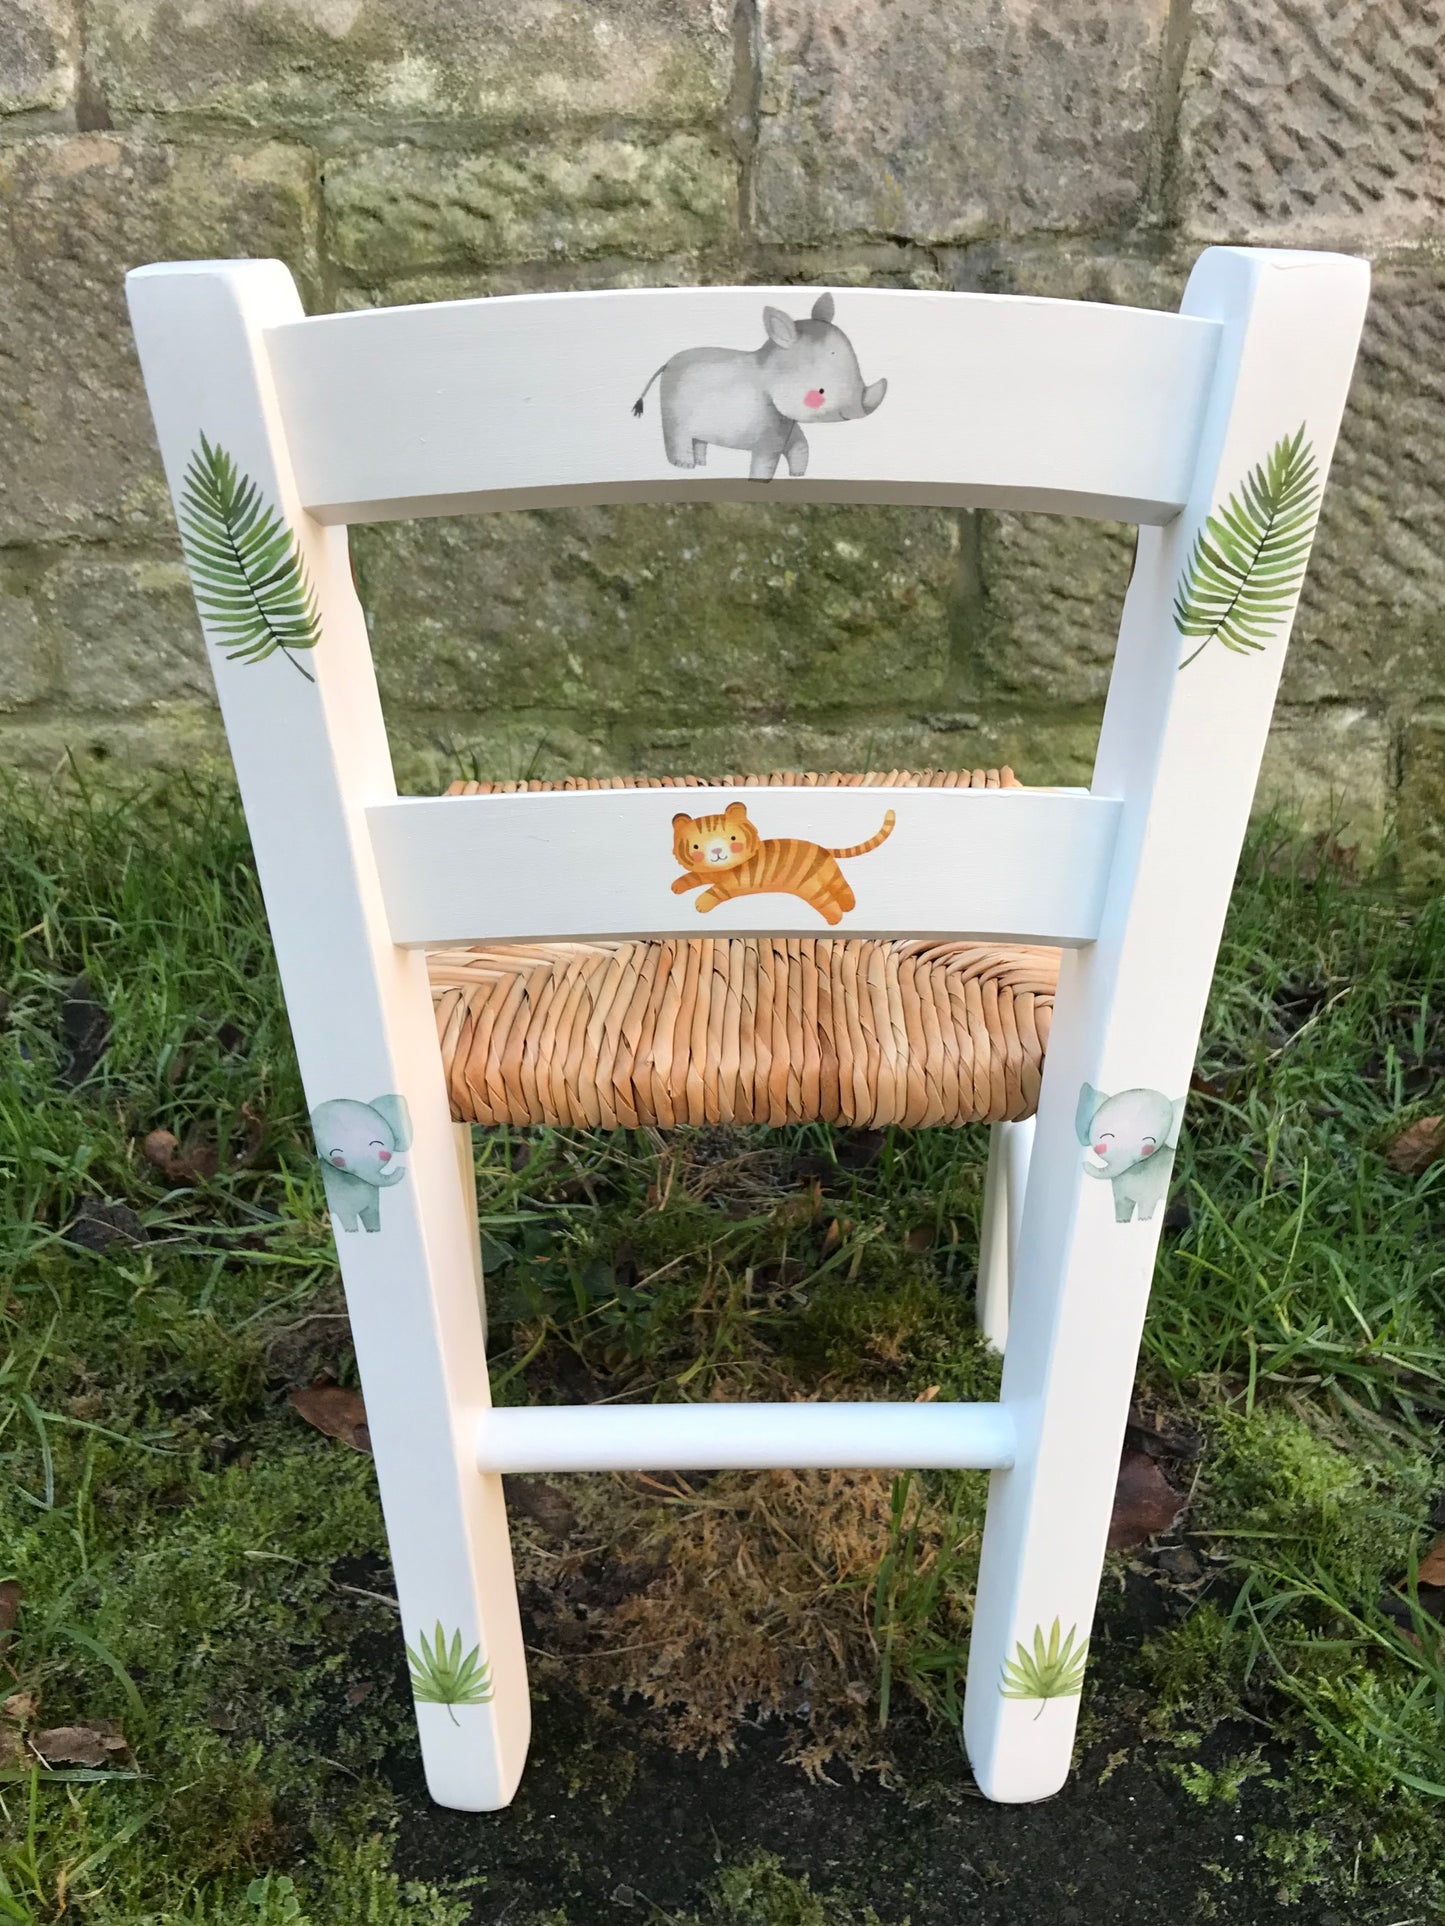 Rush seat personalised children's chair - Sweet Safari theme - made to order